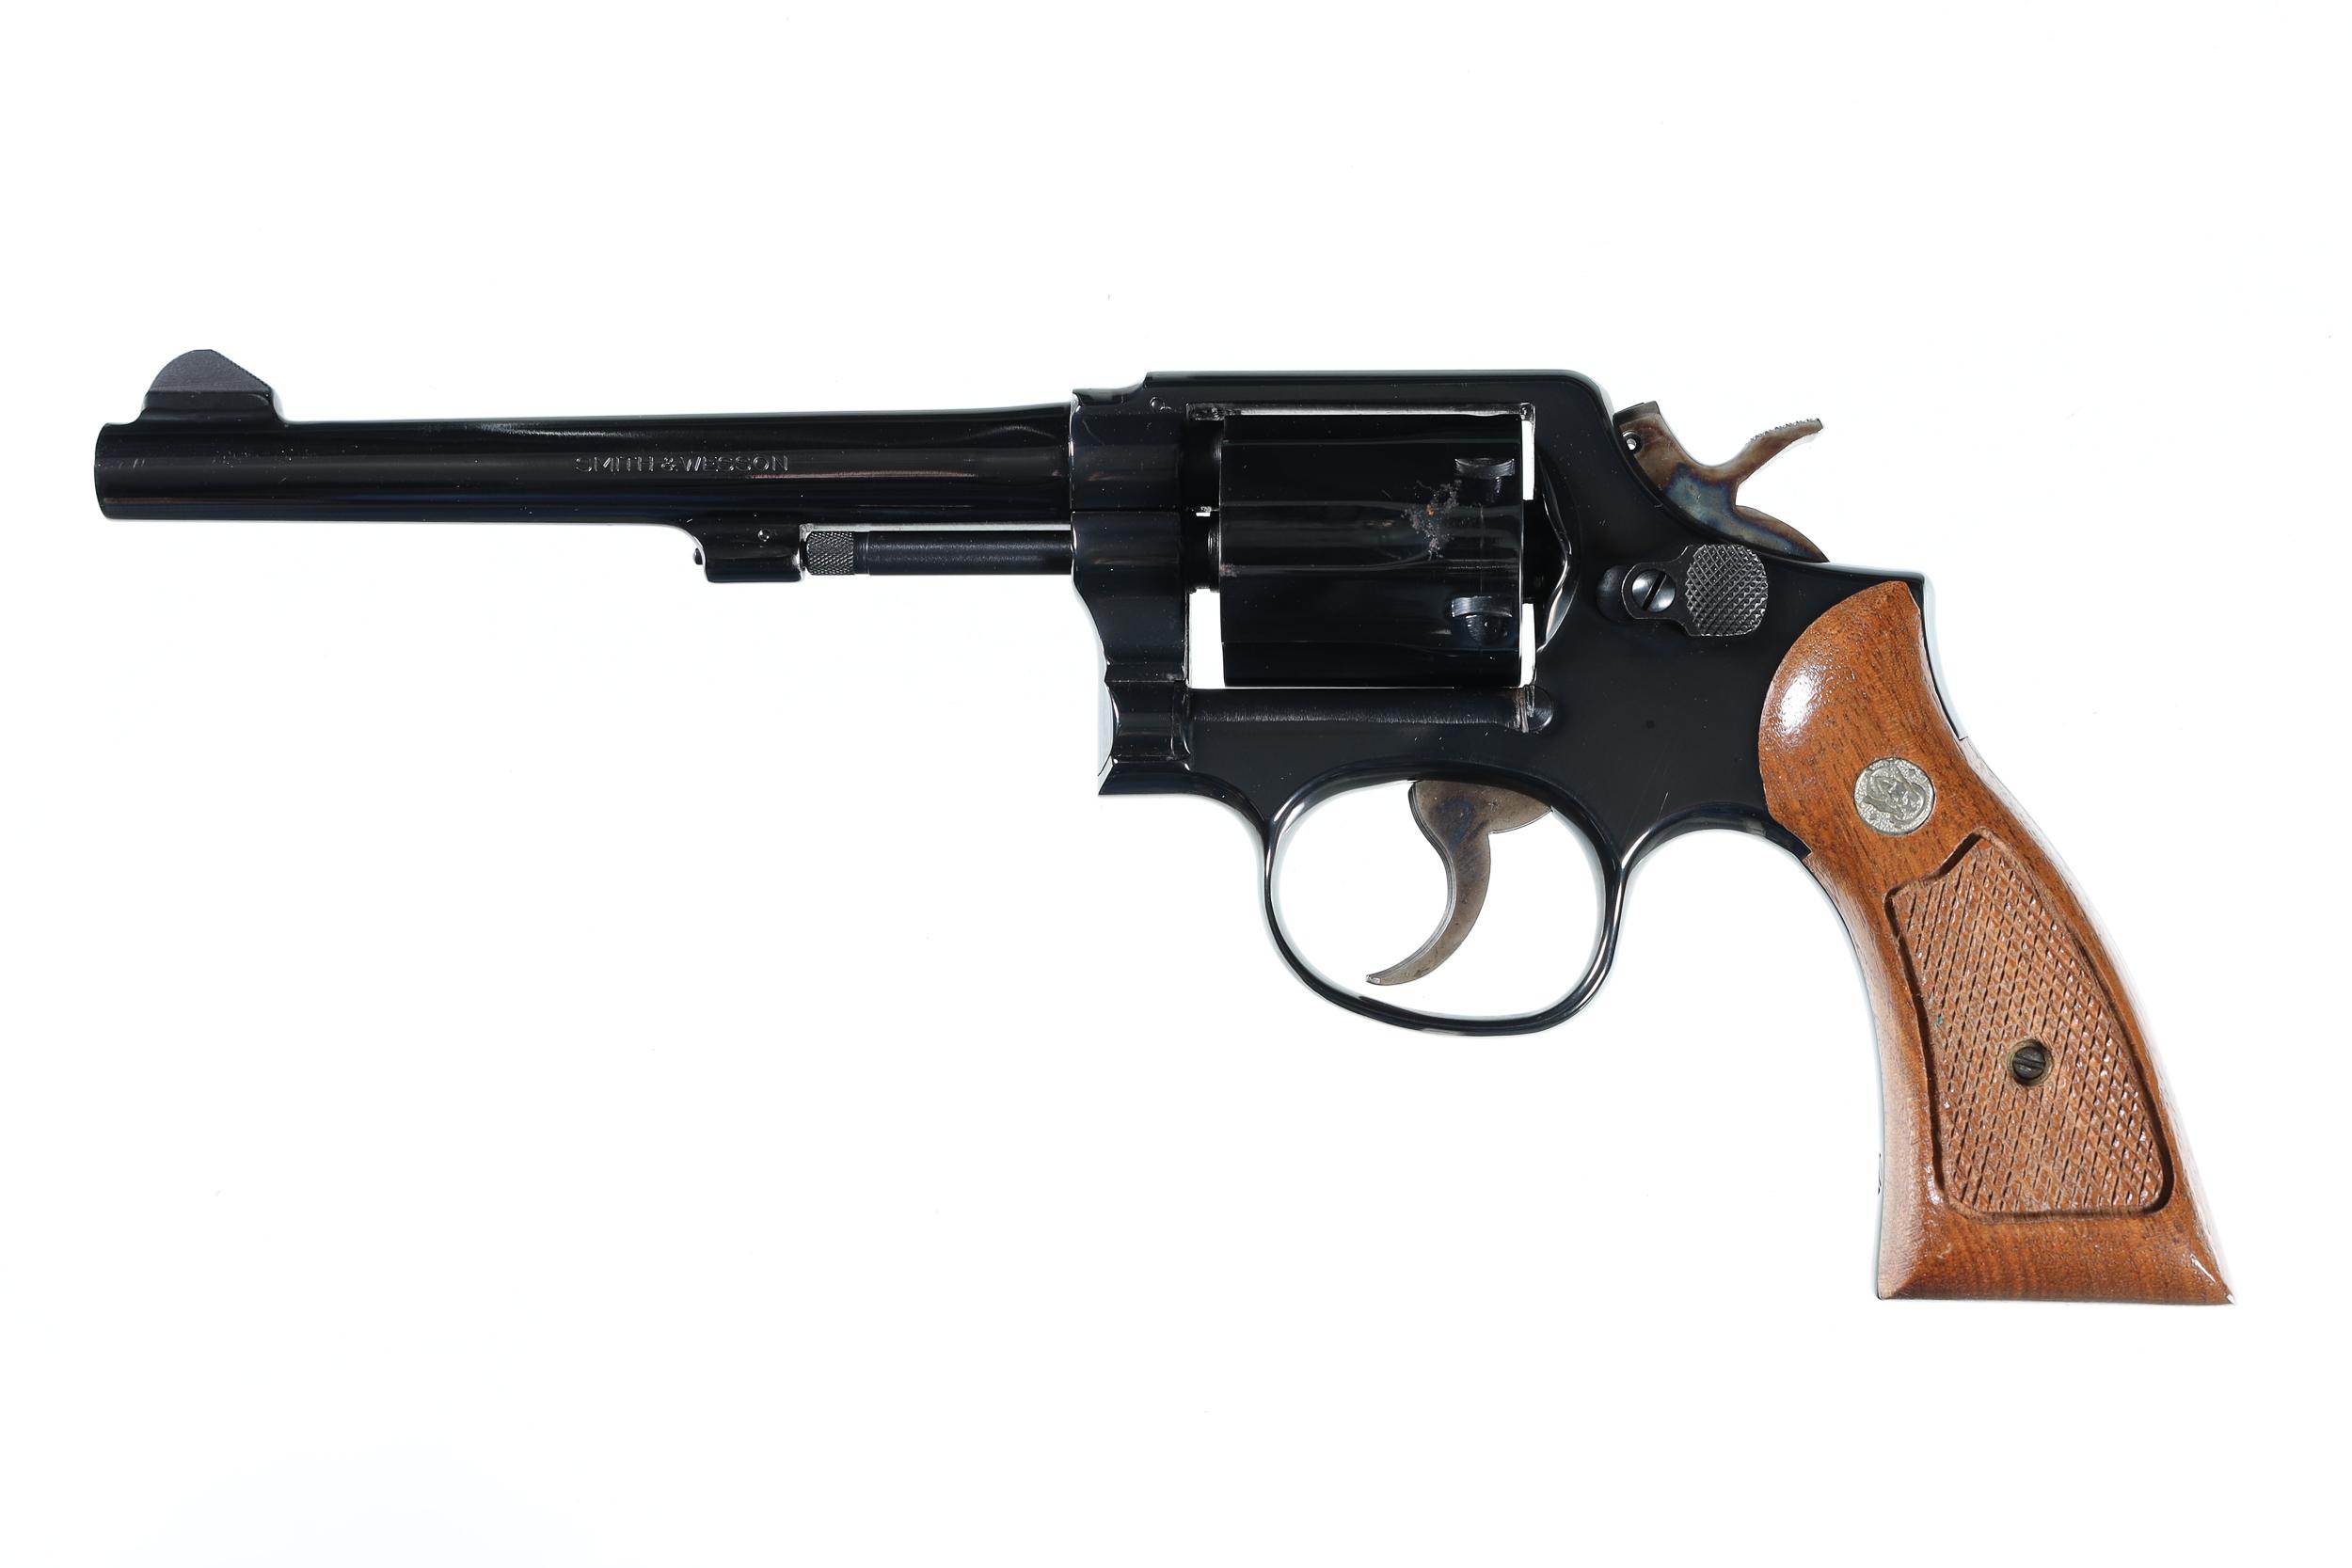 Smith & Wesson 10 7 Revolver .38 spl